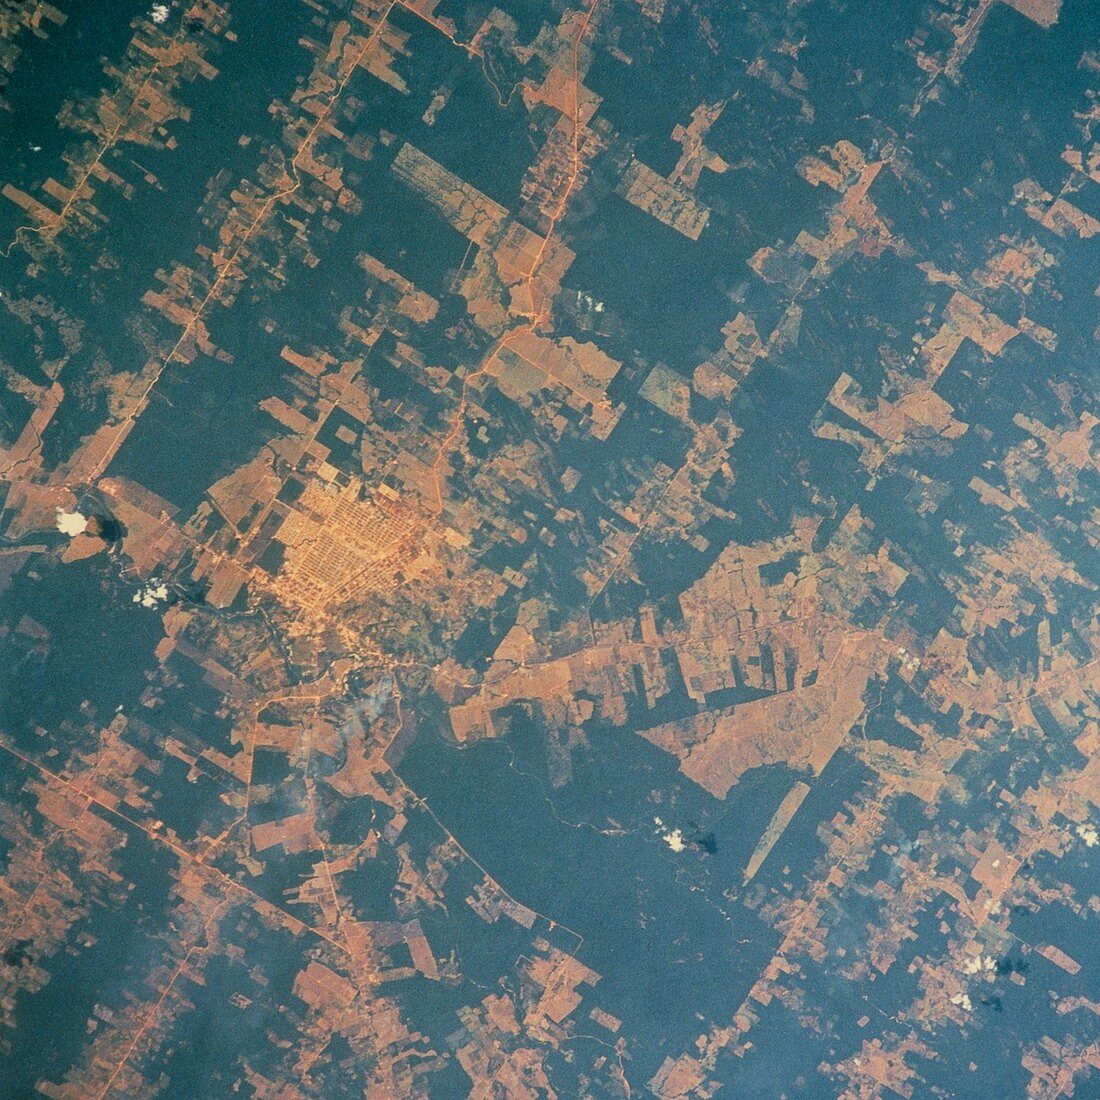 Deforestation in Brazil,seen from Shuttle STS-46